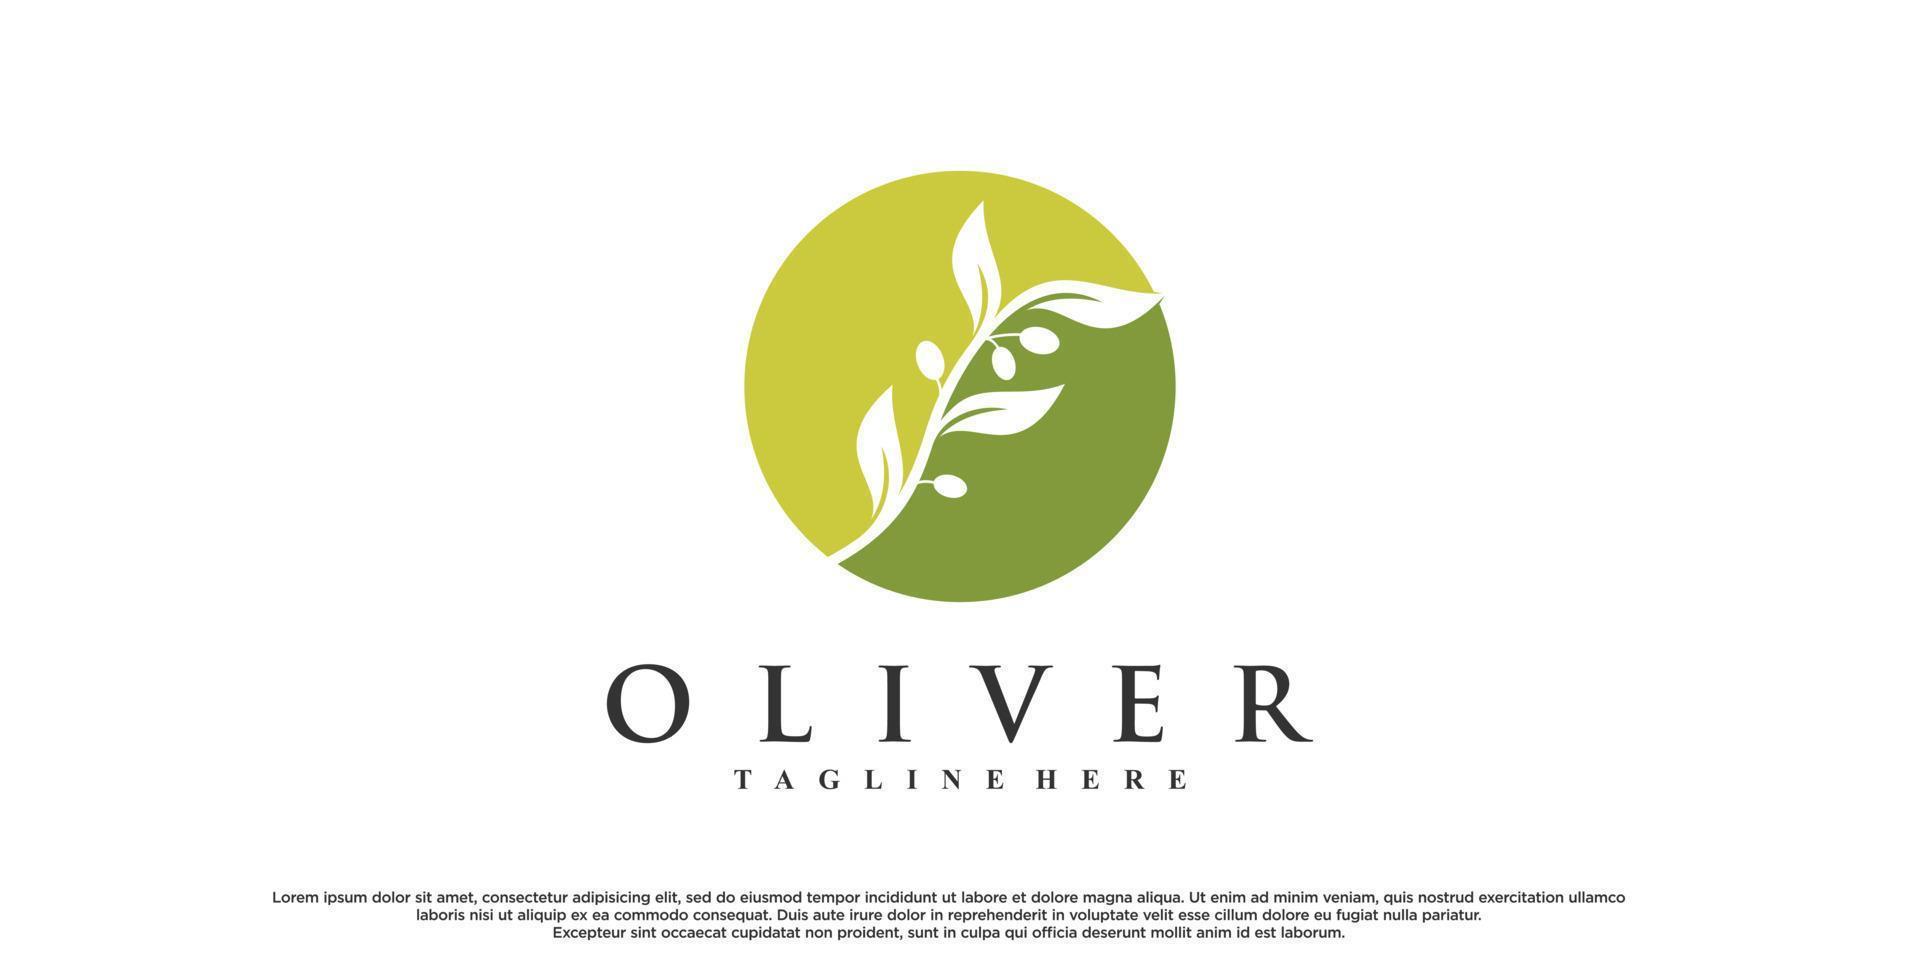 Olive oil logo design with modern concept Premium Vector